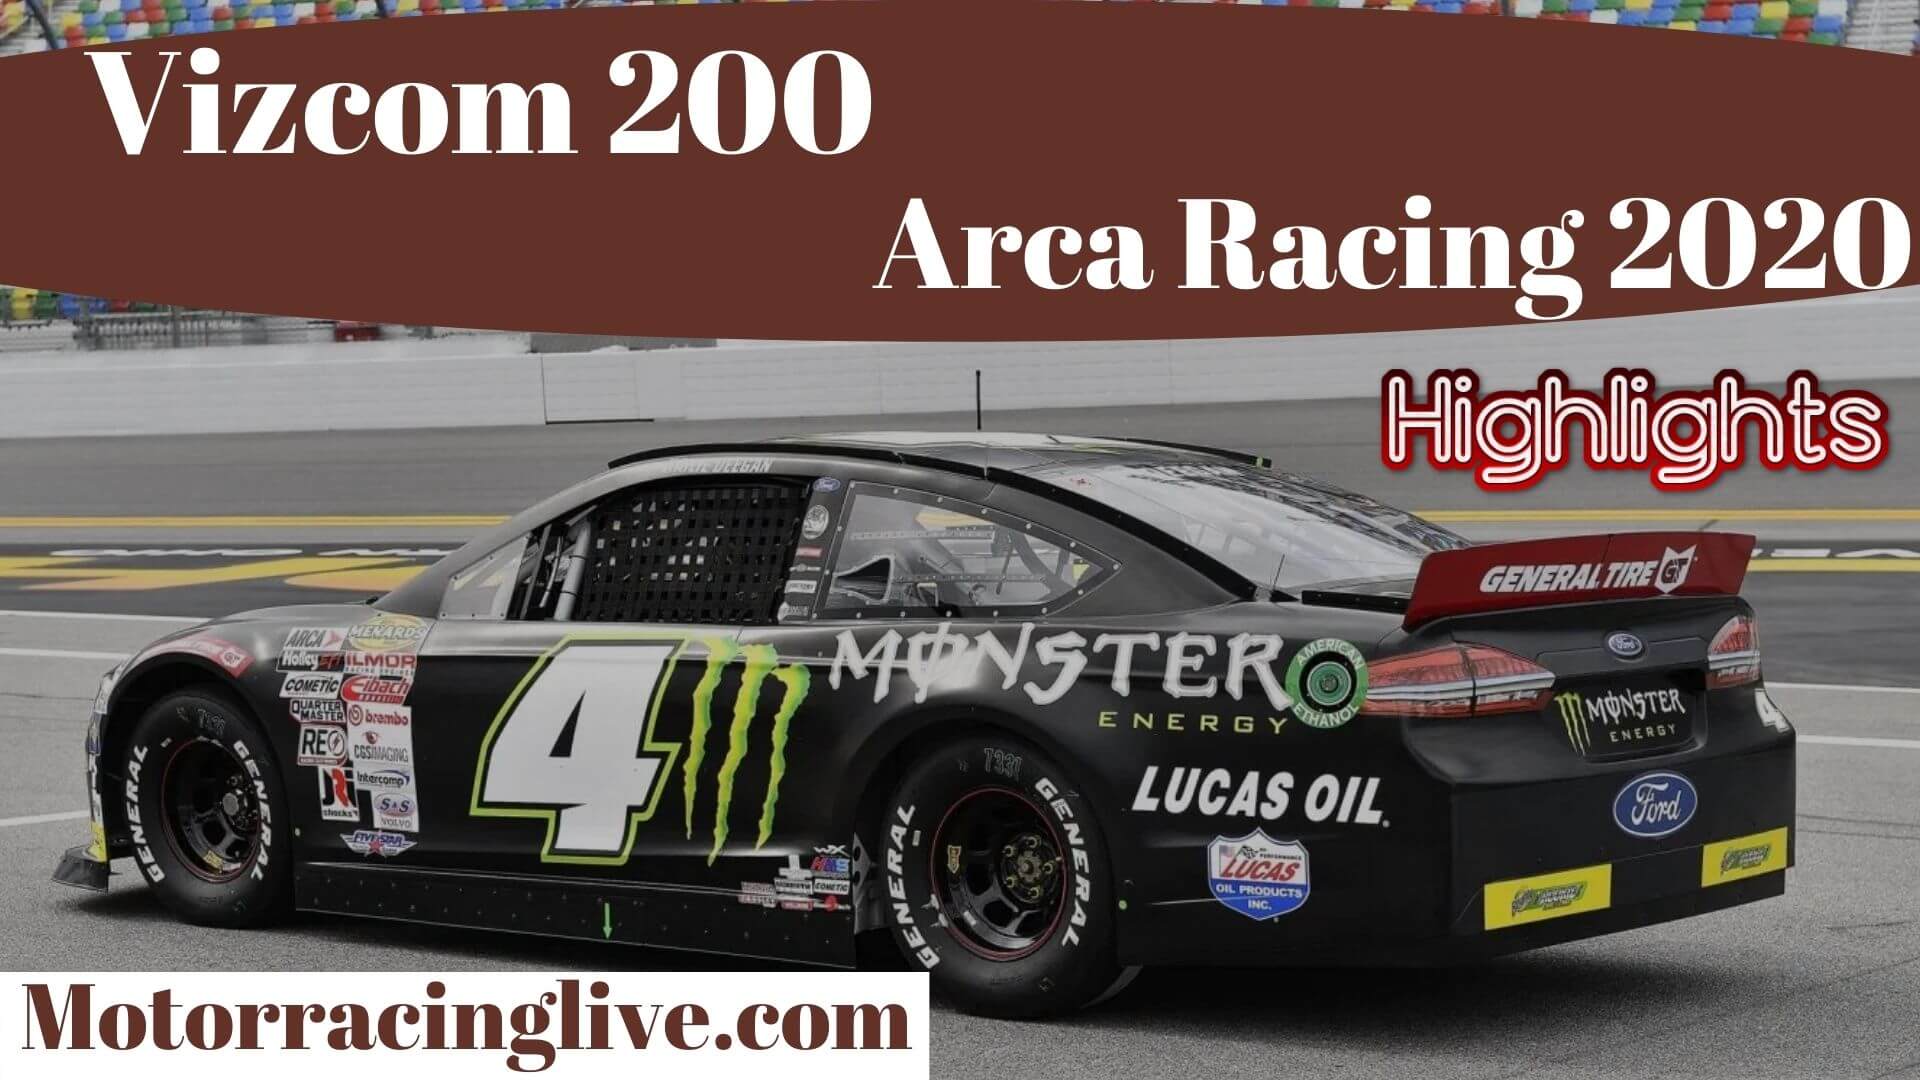 Vizcom 200 Highlights Arca Racing 2020